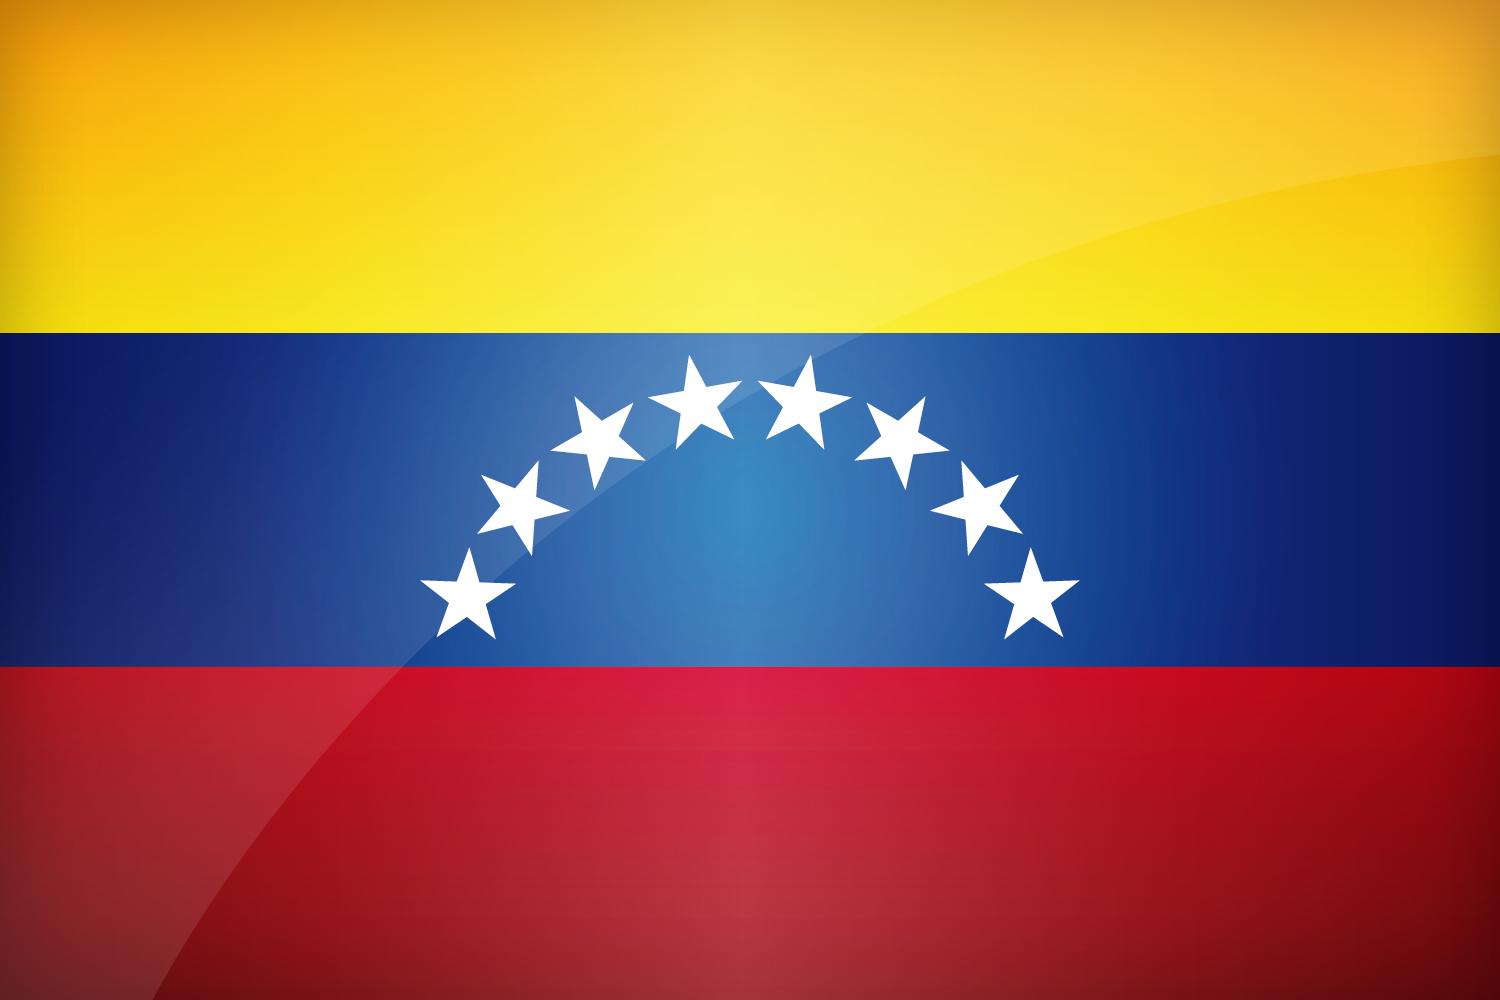 Spanish court suspends extradition of Venezuela’s ex-spymaster to U.S.